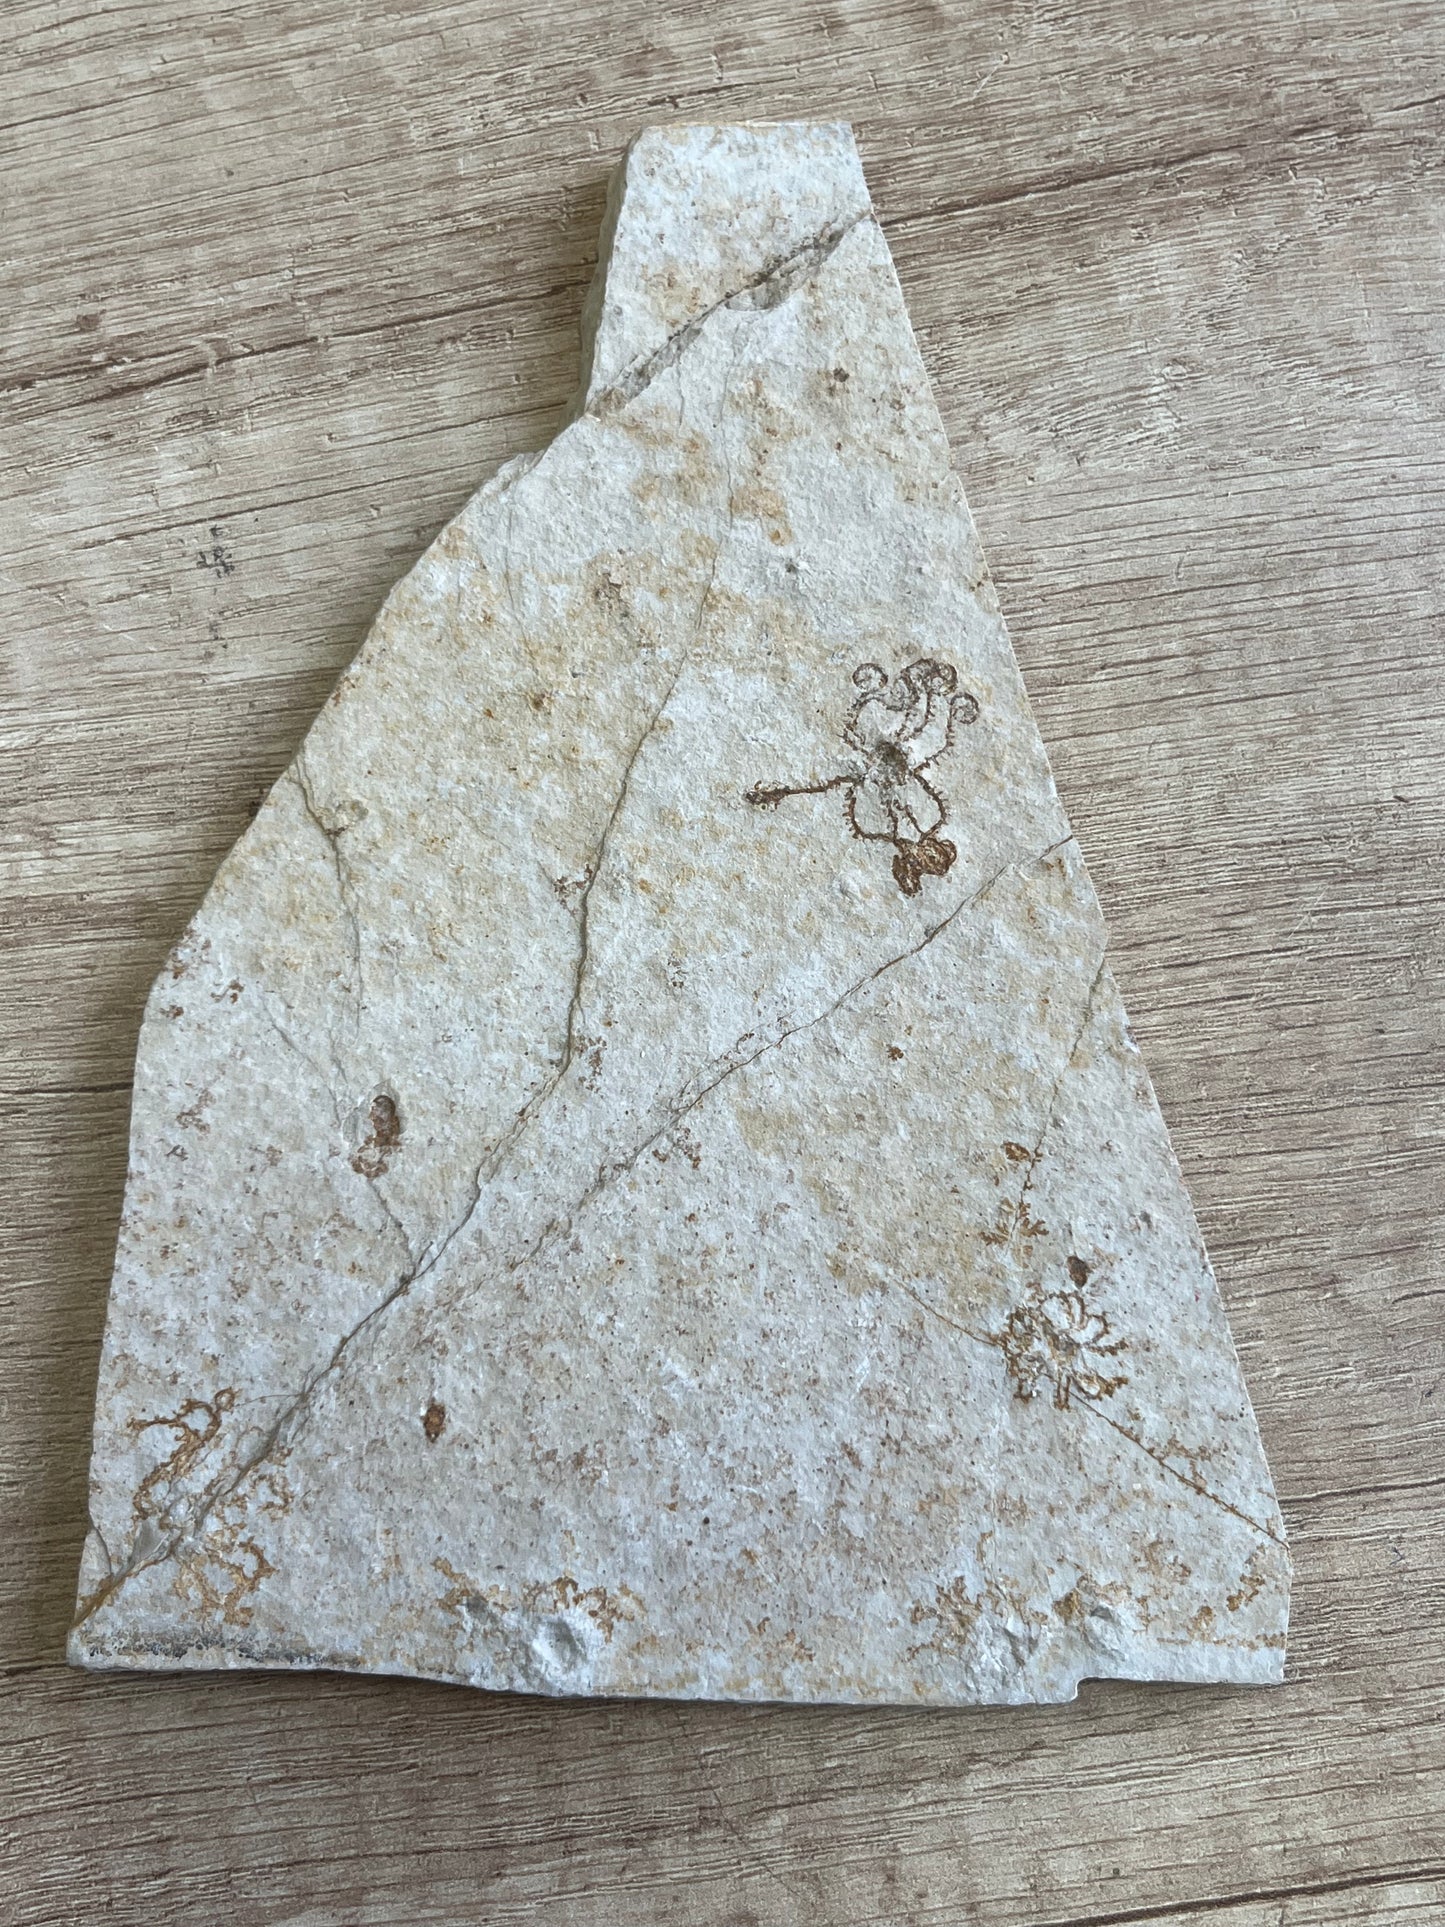 crinoïde Saccocoma Pectinata fossile Calcaire de Sohnhofen Allemagne